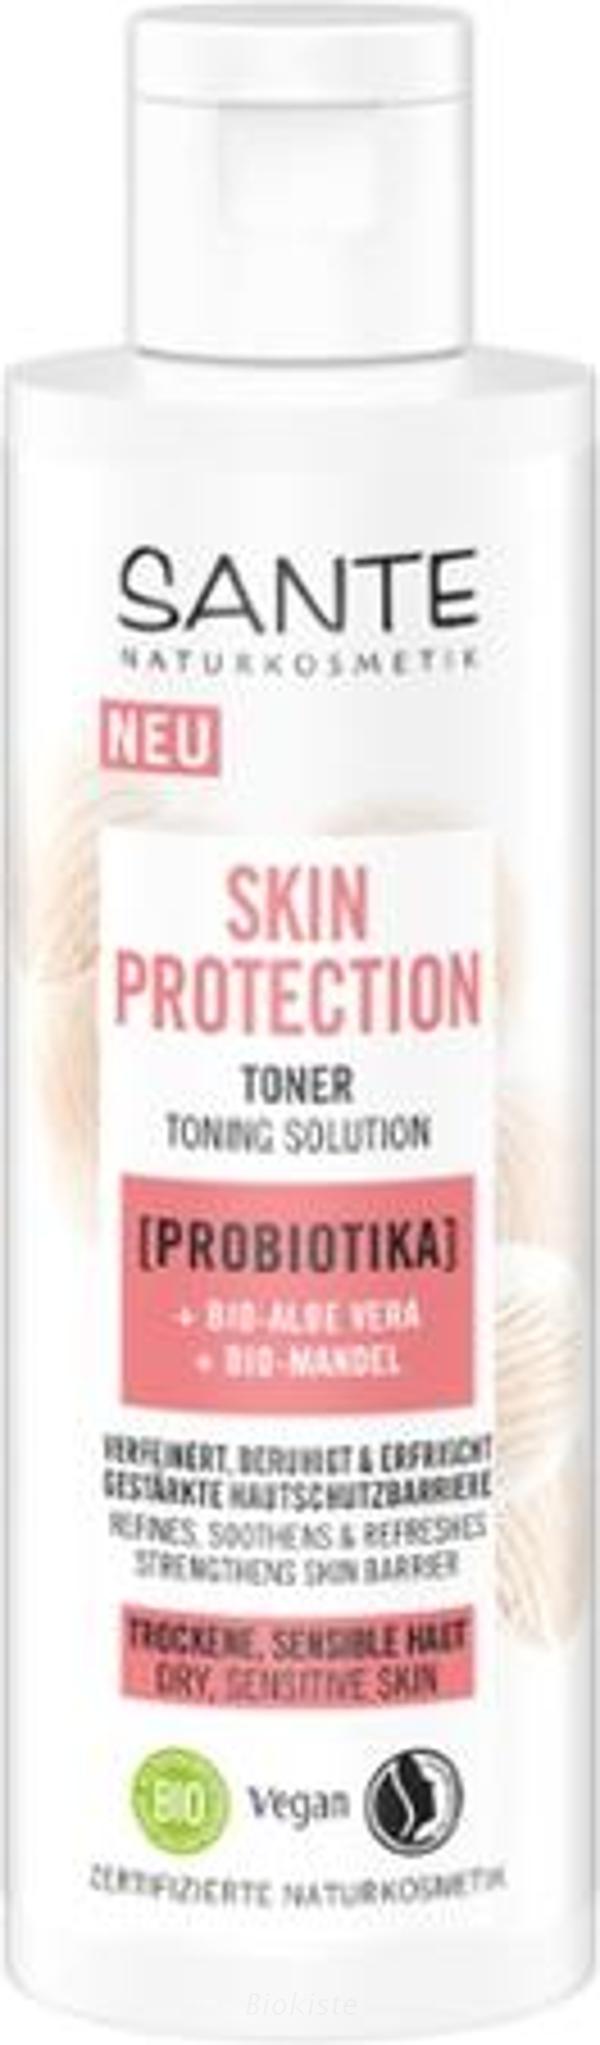 Produktfoto zu Skin Protection Toner